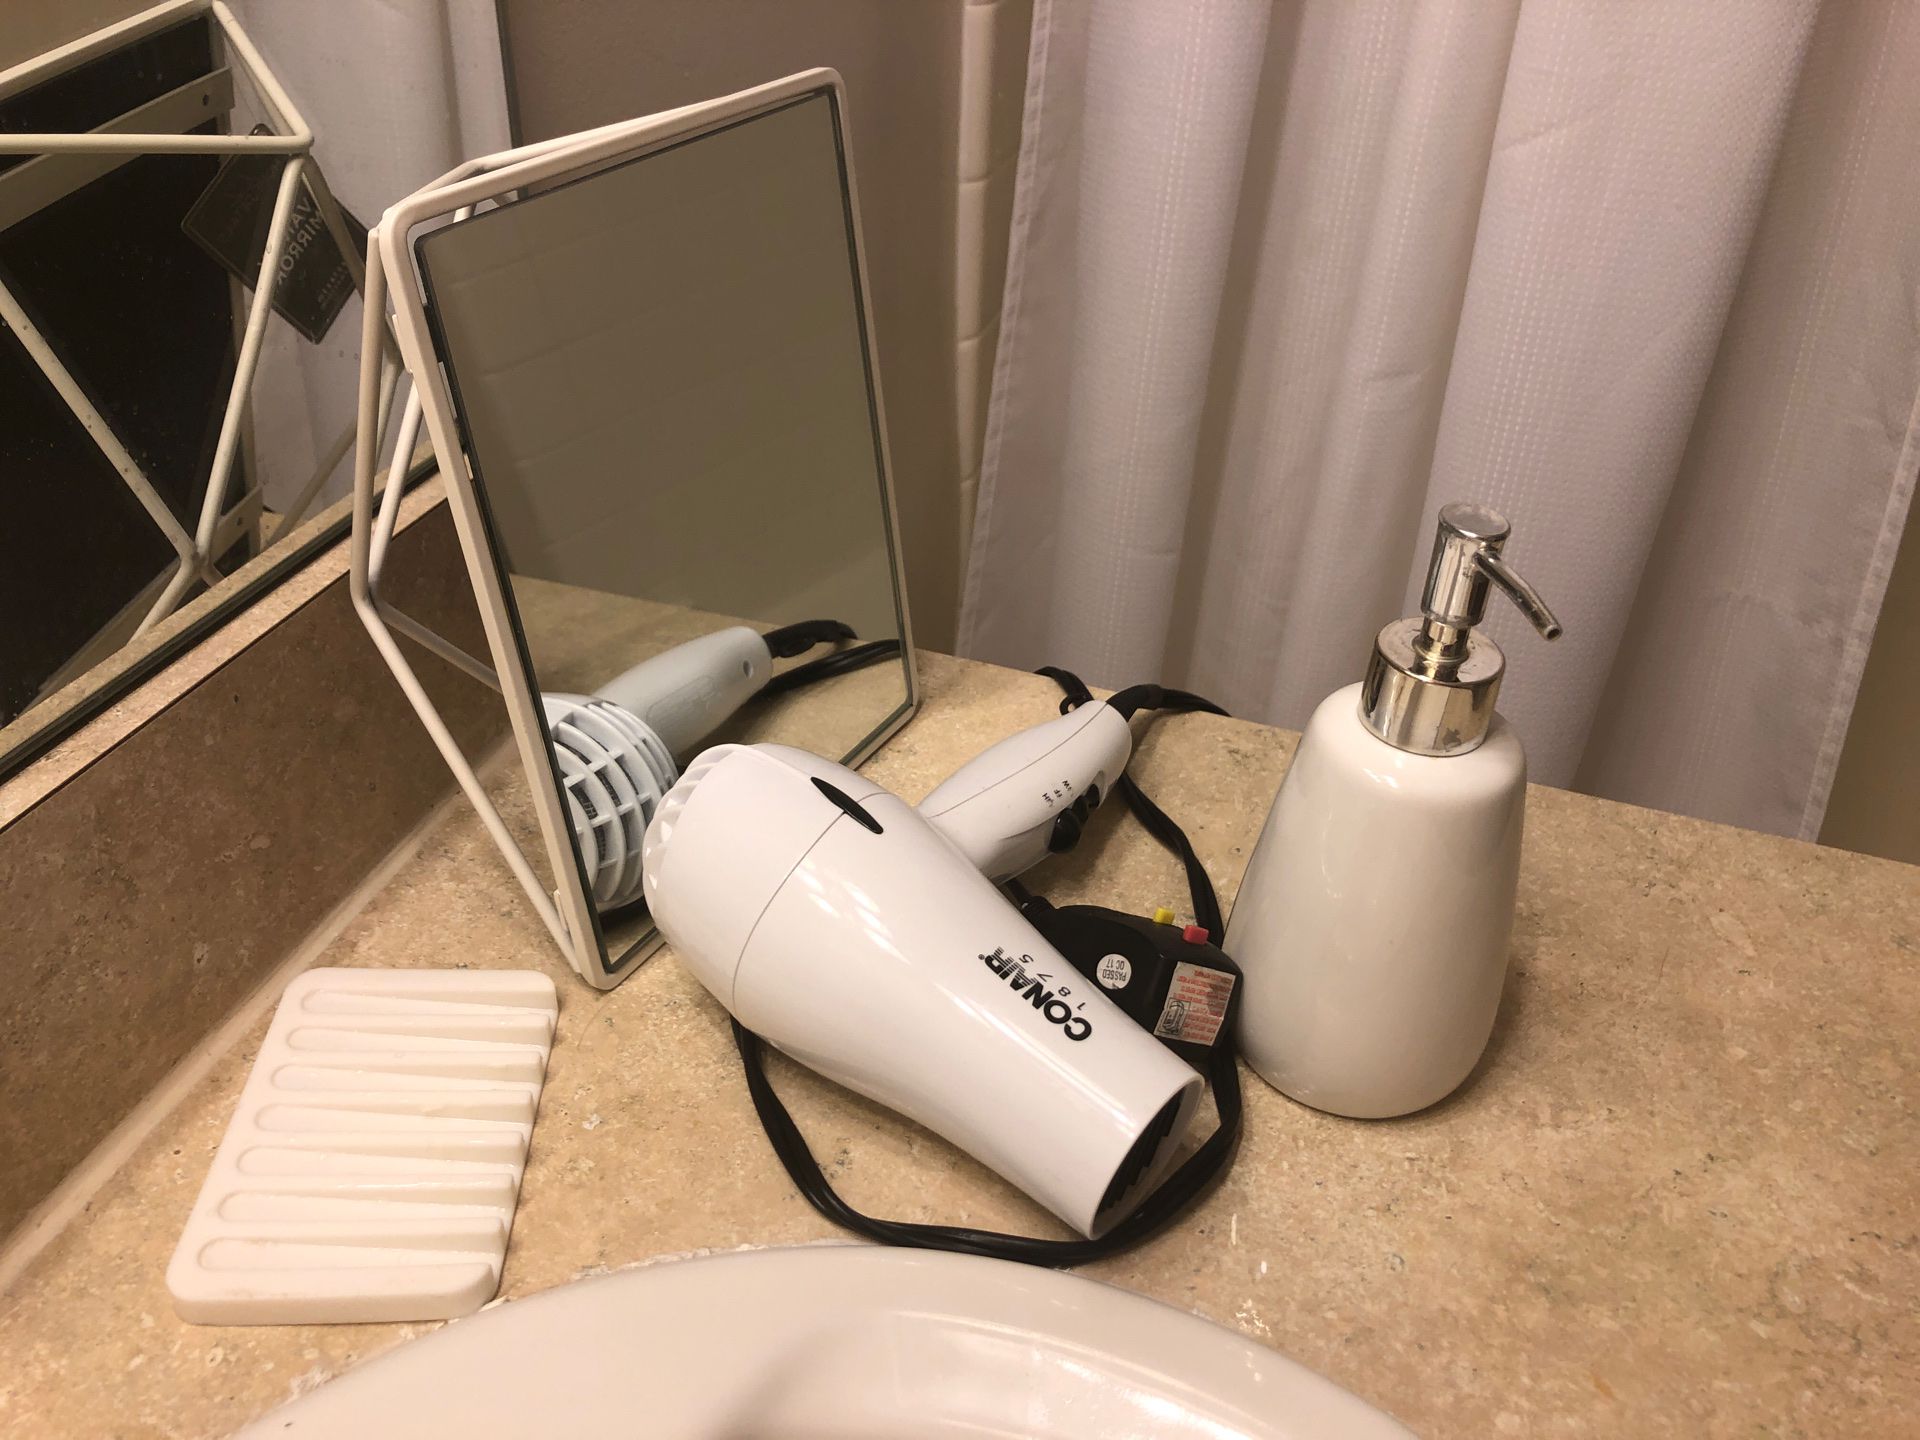 Bathroom items: Hair dryer, soap dispenser, mirror